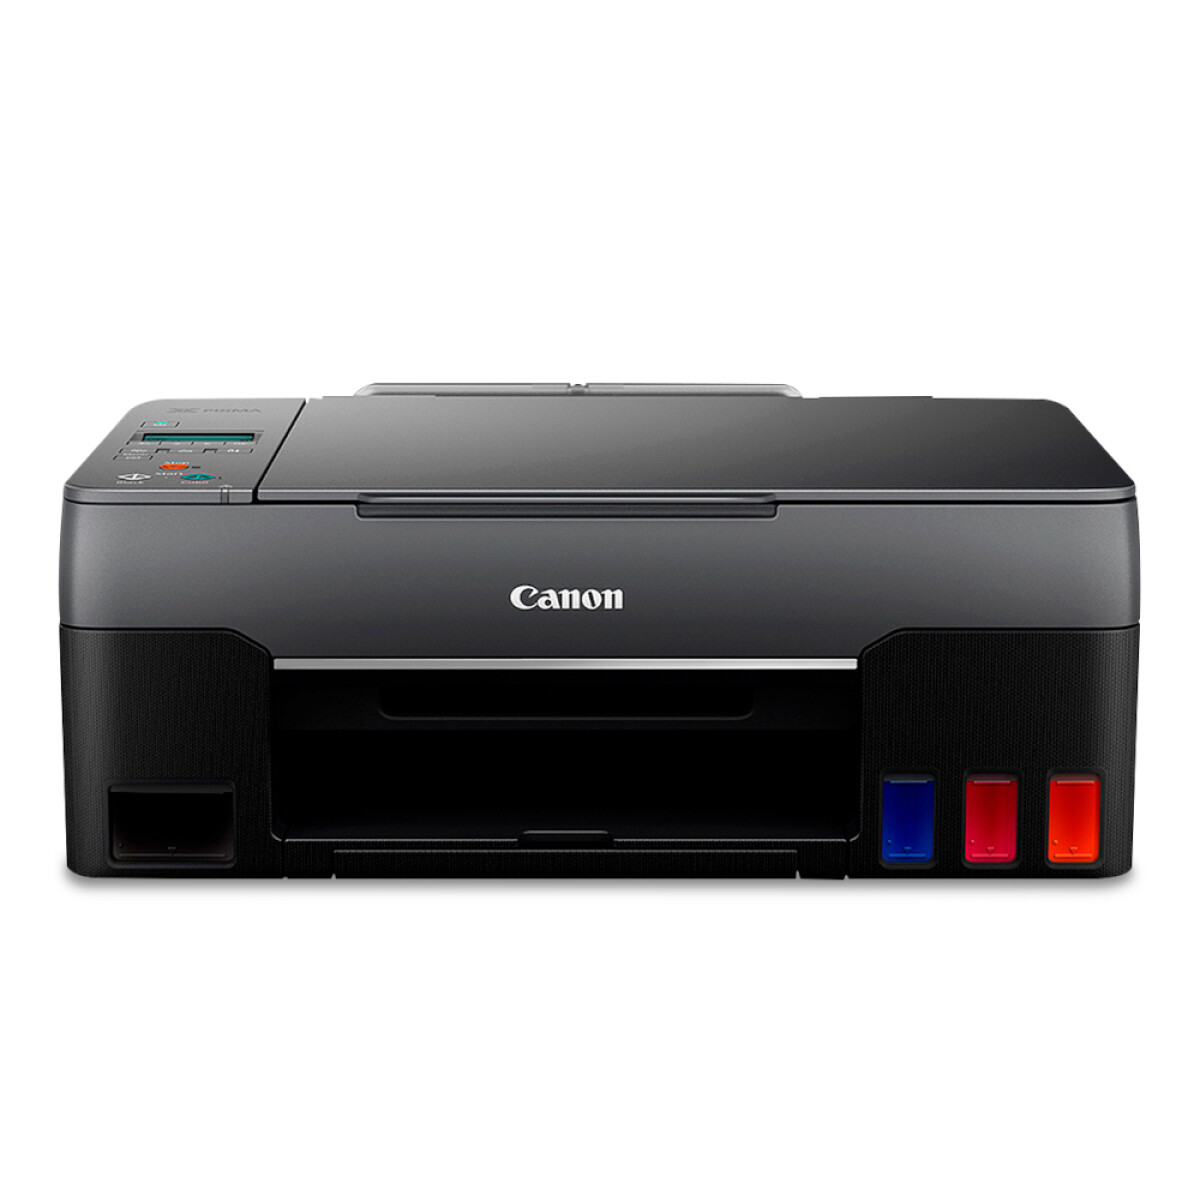 Canon - Impresora Multifuncion Pixma G2160 - Sistema Continuo. 4800 X 1200 Dpi. Usb. Escáner. - 001 